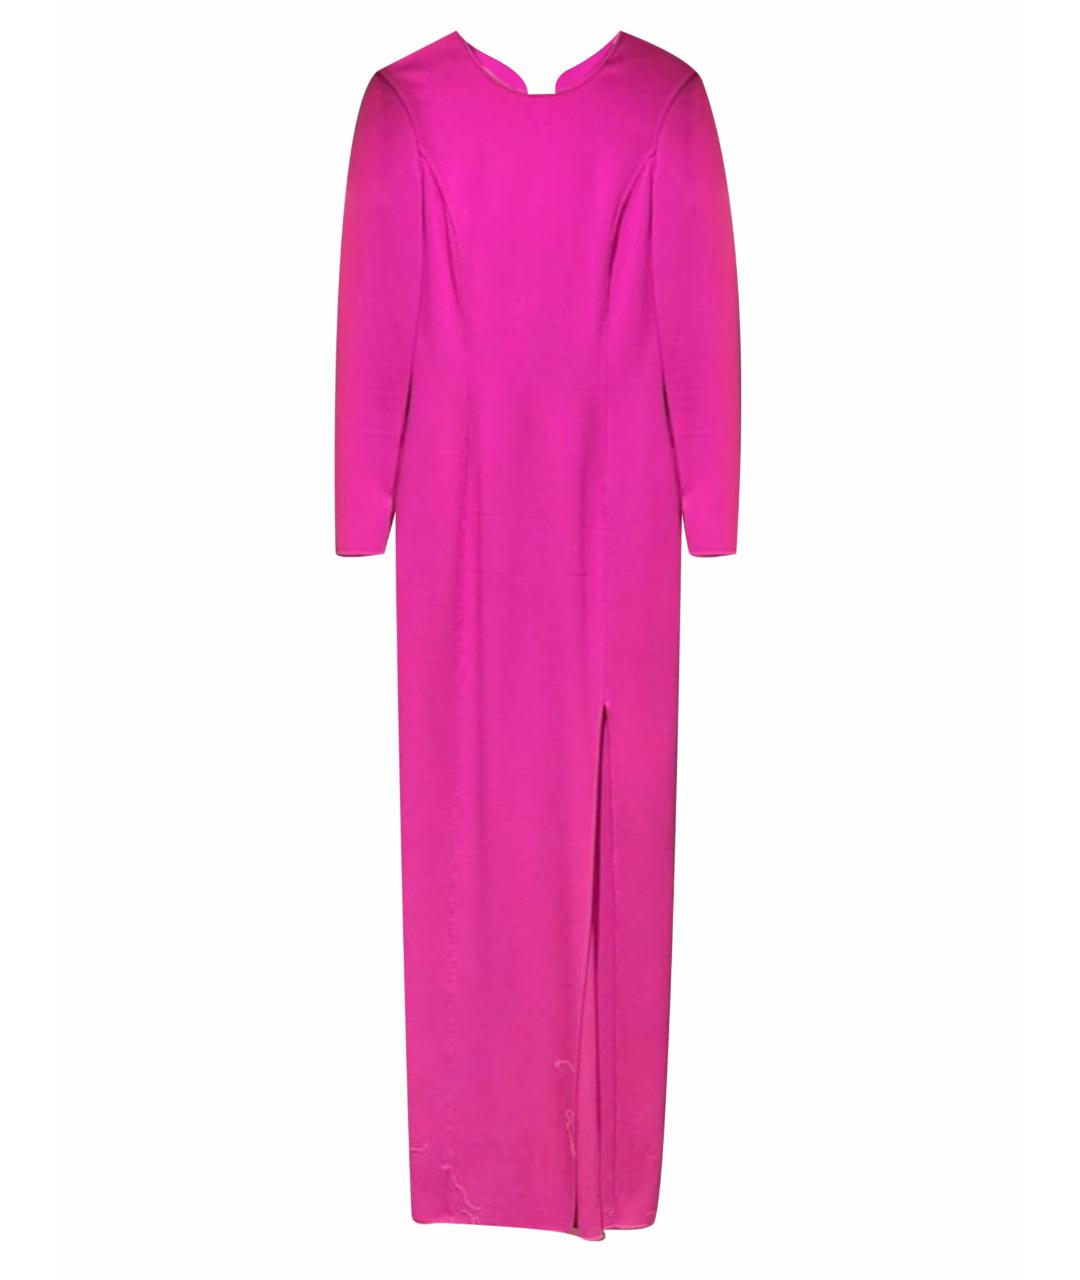 MICHAEL KORS COLLECTION Фуксия вечернее платье, фото 1